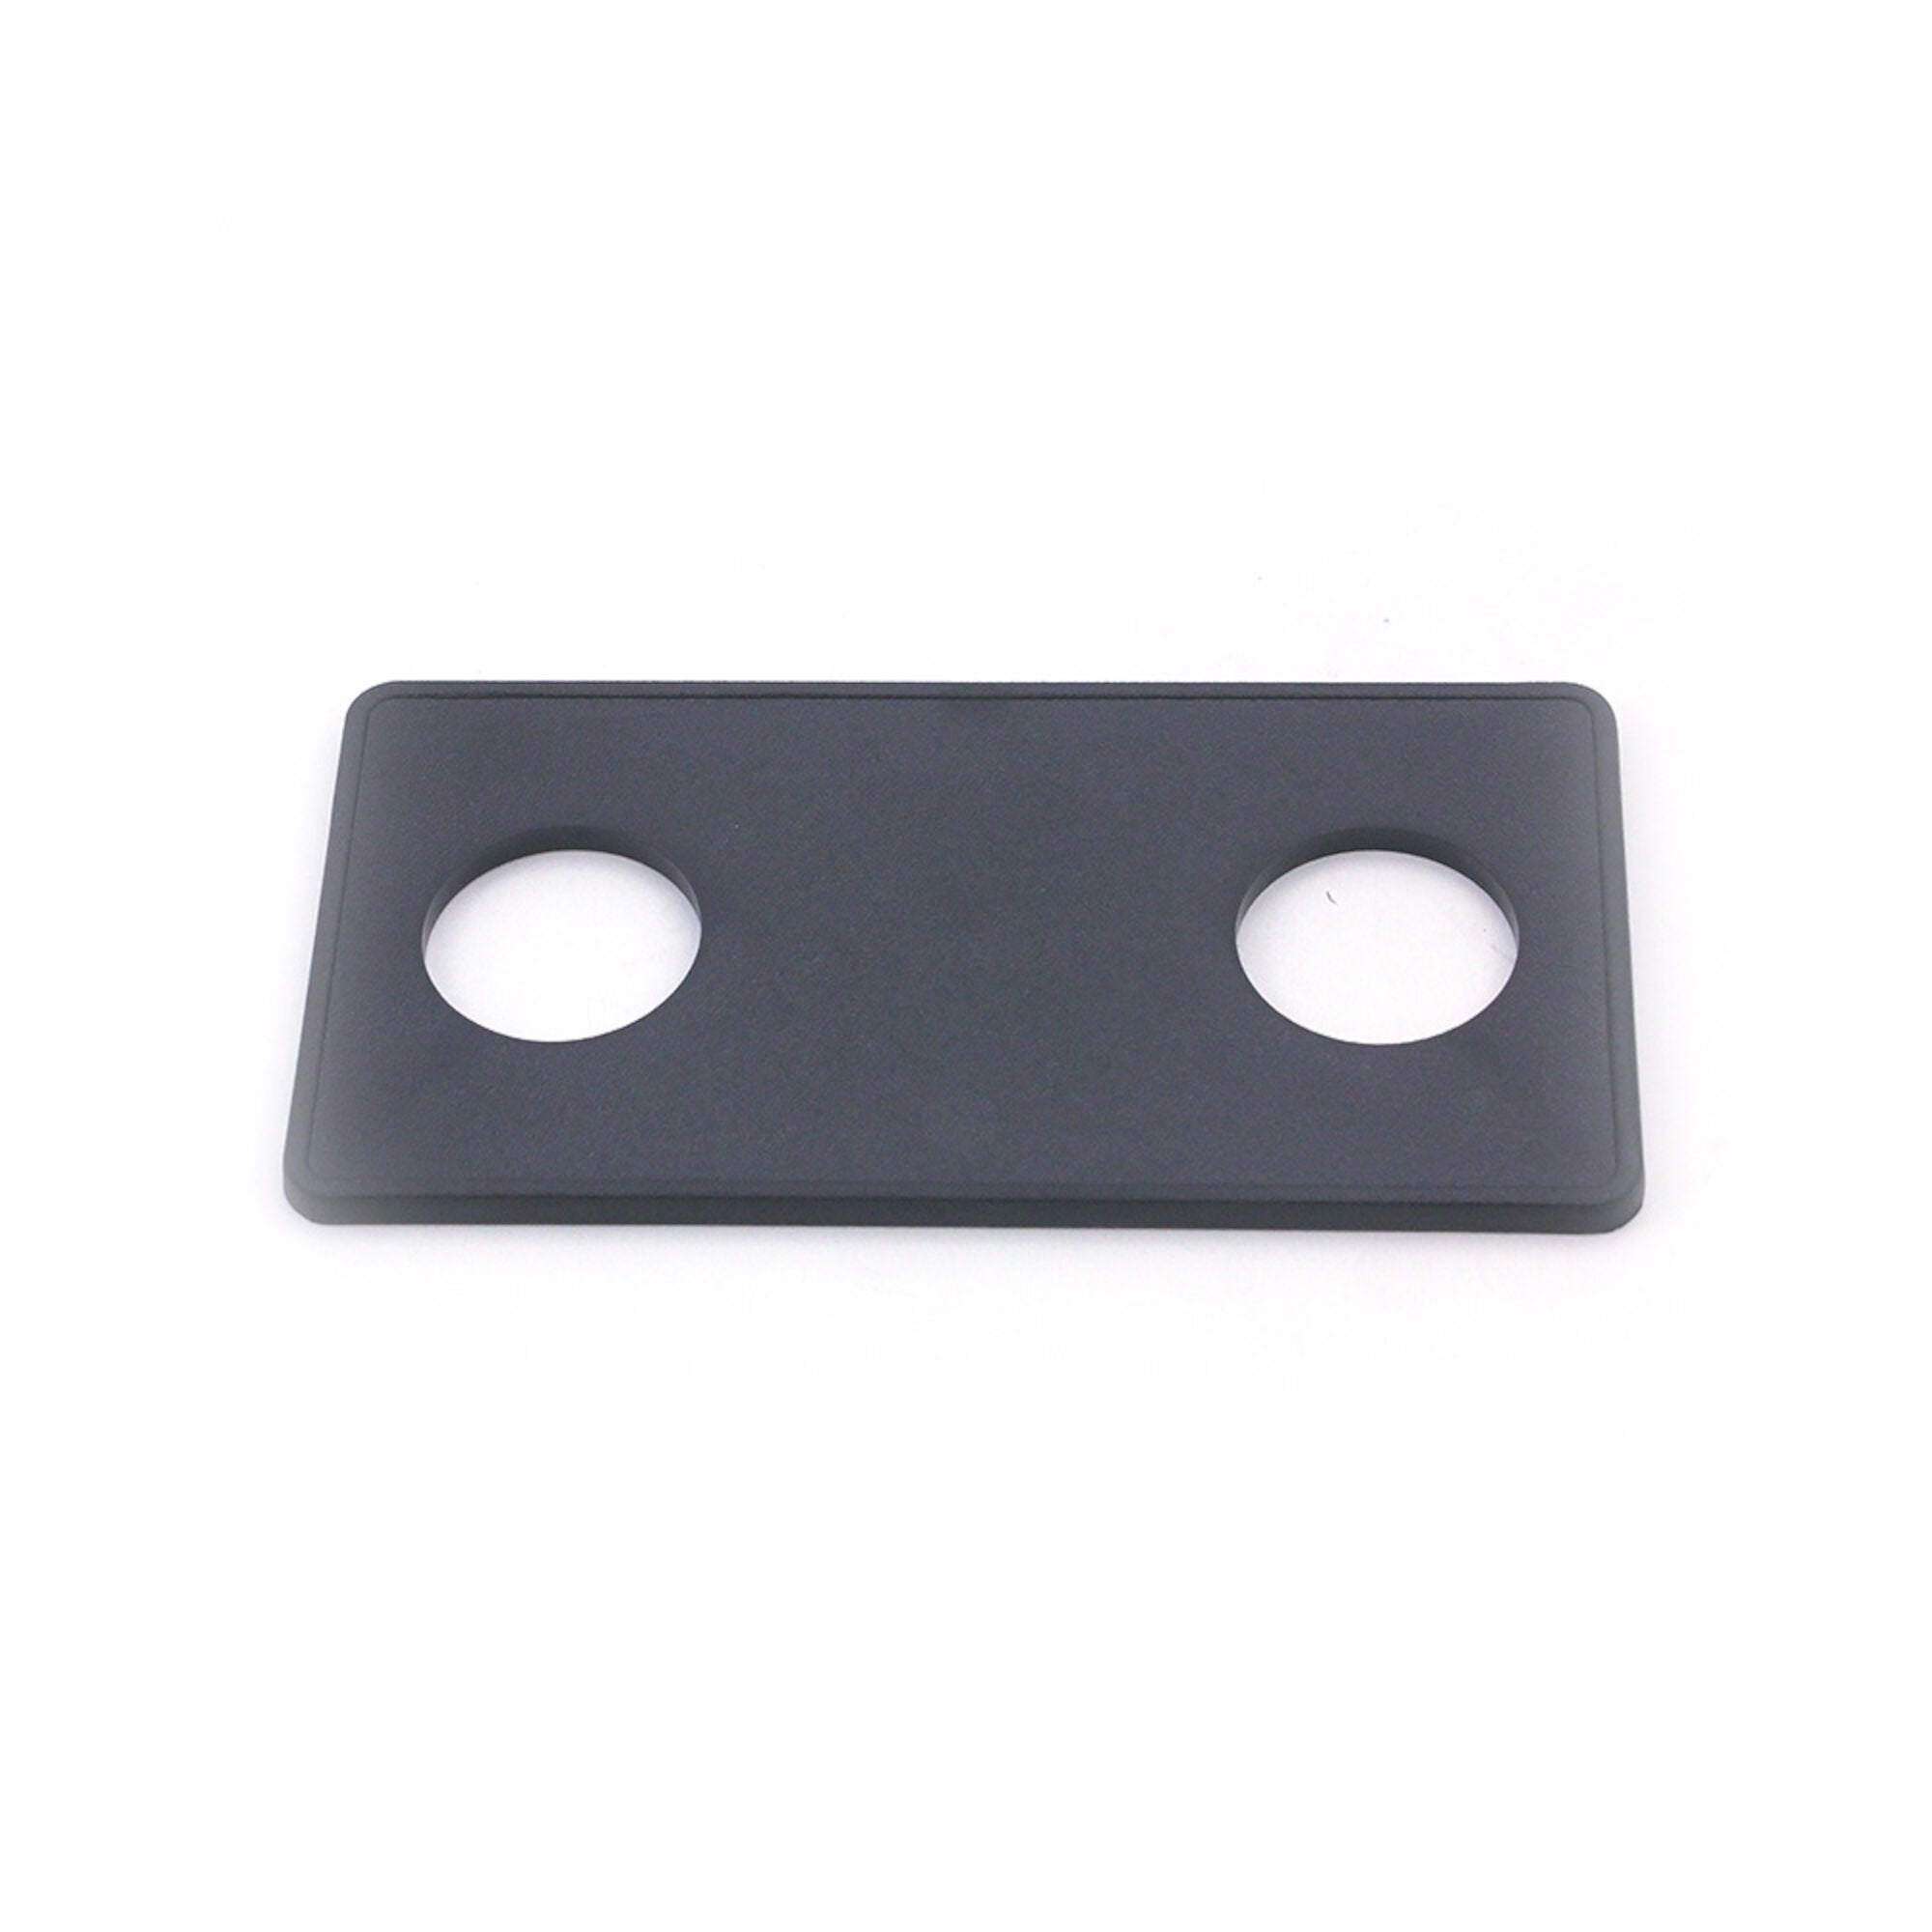 Air Button Deckplate #15 CLASSIC TOUCH, 2 BUTTON PANEL, BLACK